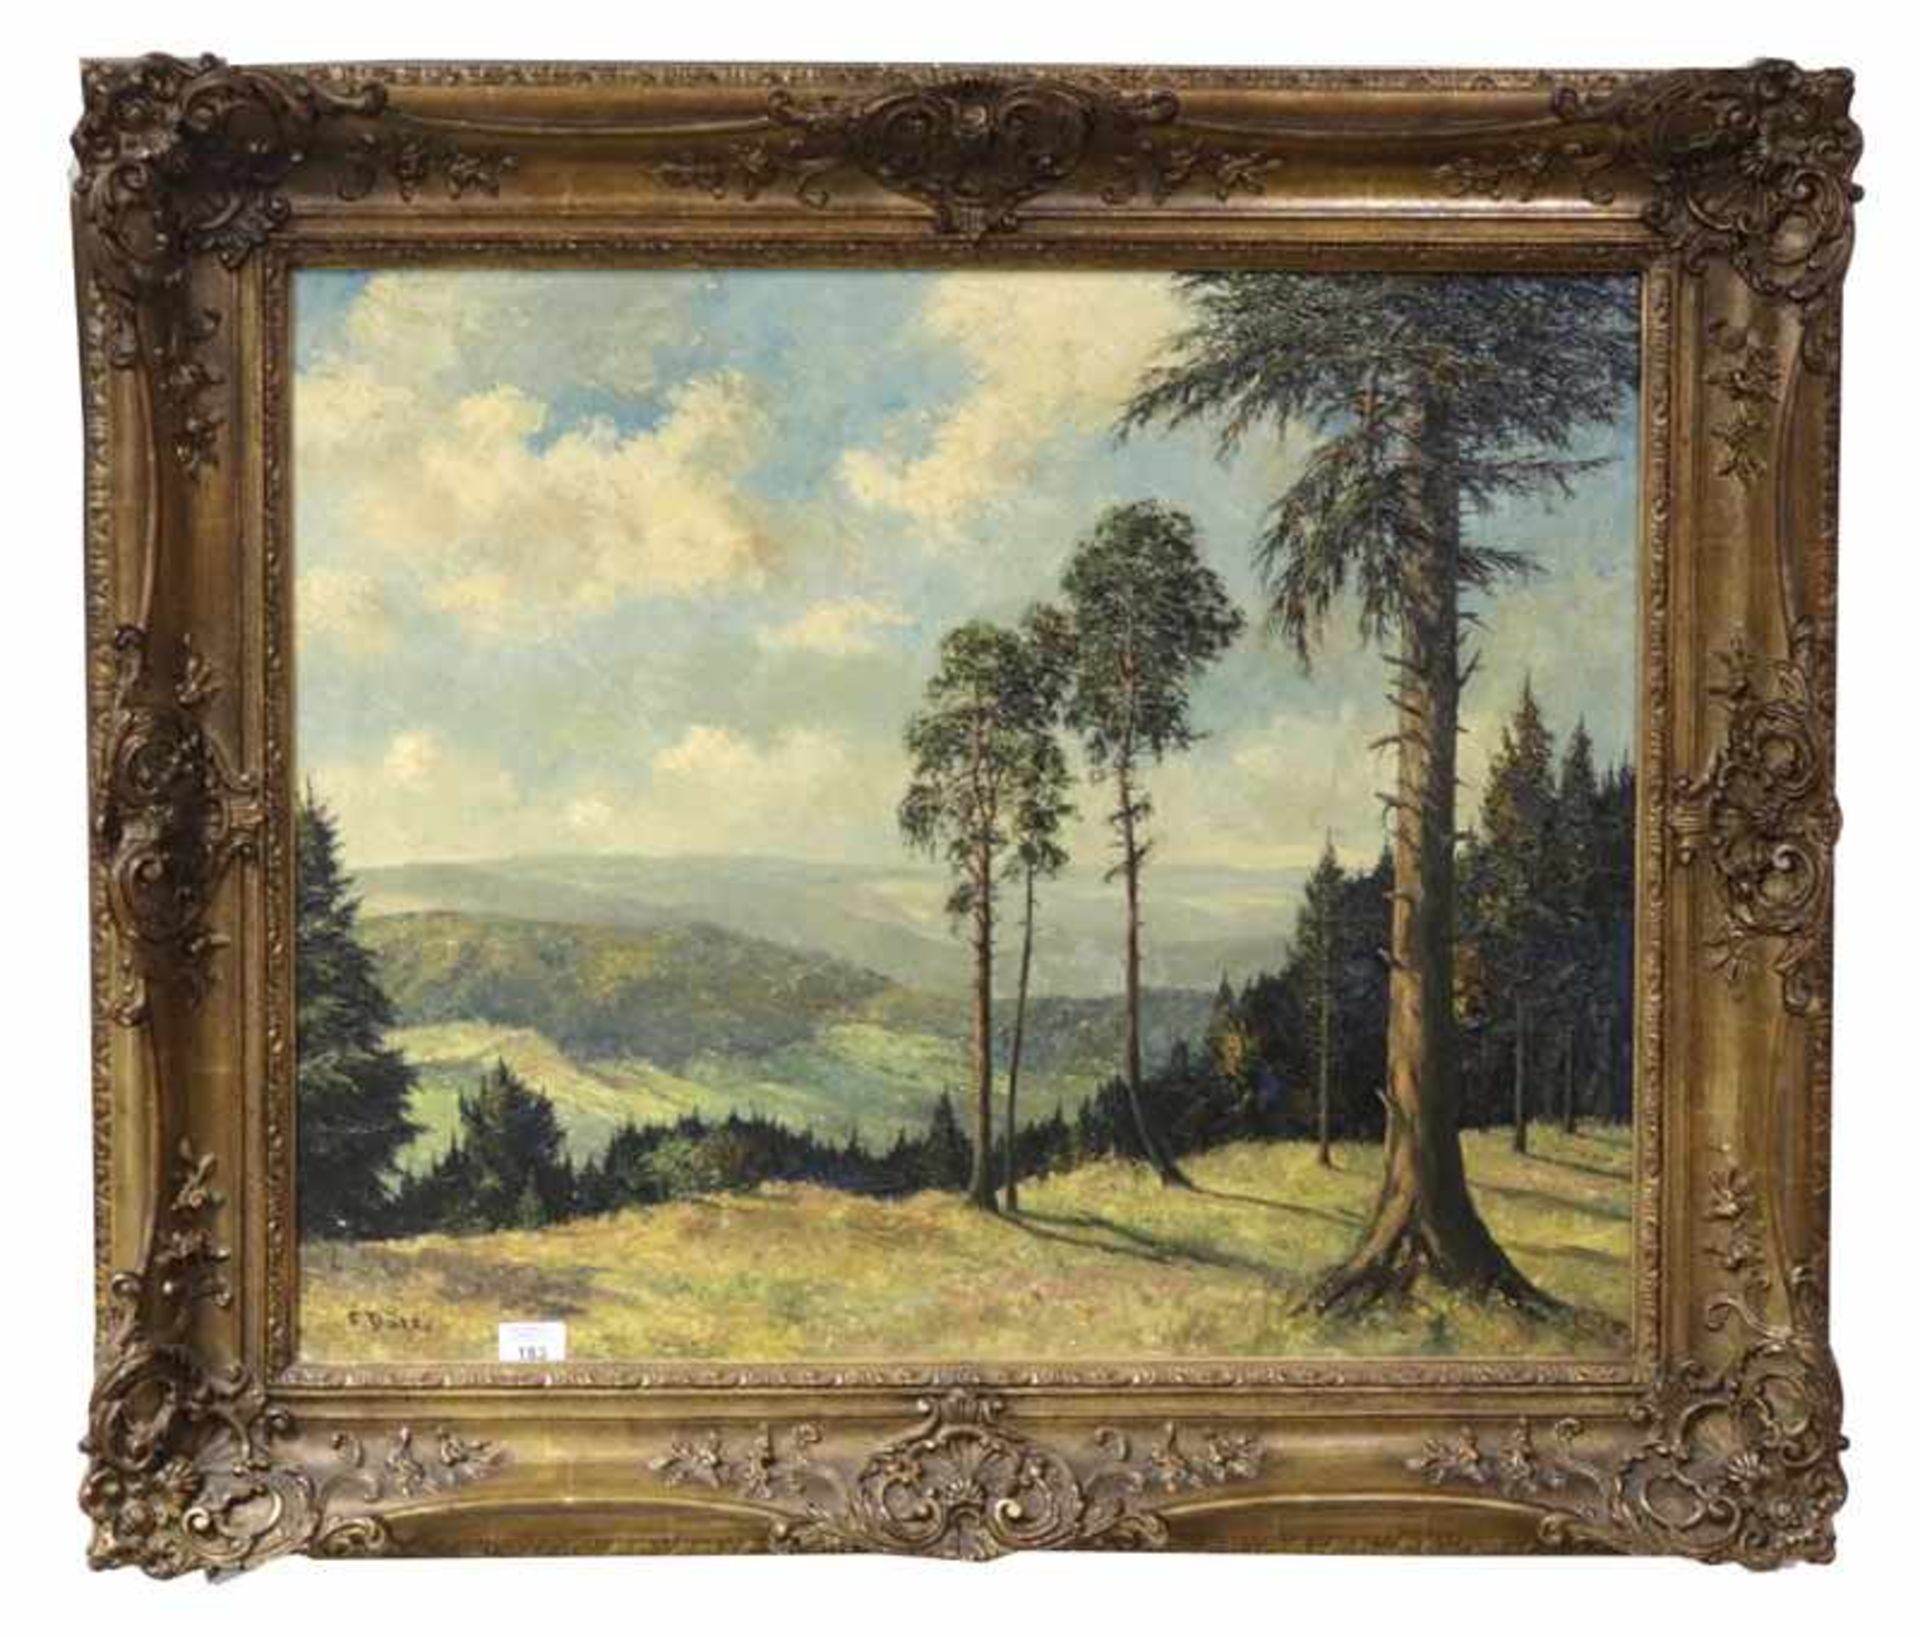 Gemälde ÖL/LW 'Landschafts-Szenerie mit Talblick', signiert F. (Ferdinand) Dürr, * 1880 + 1968,